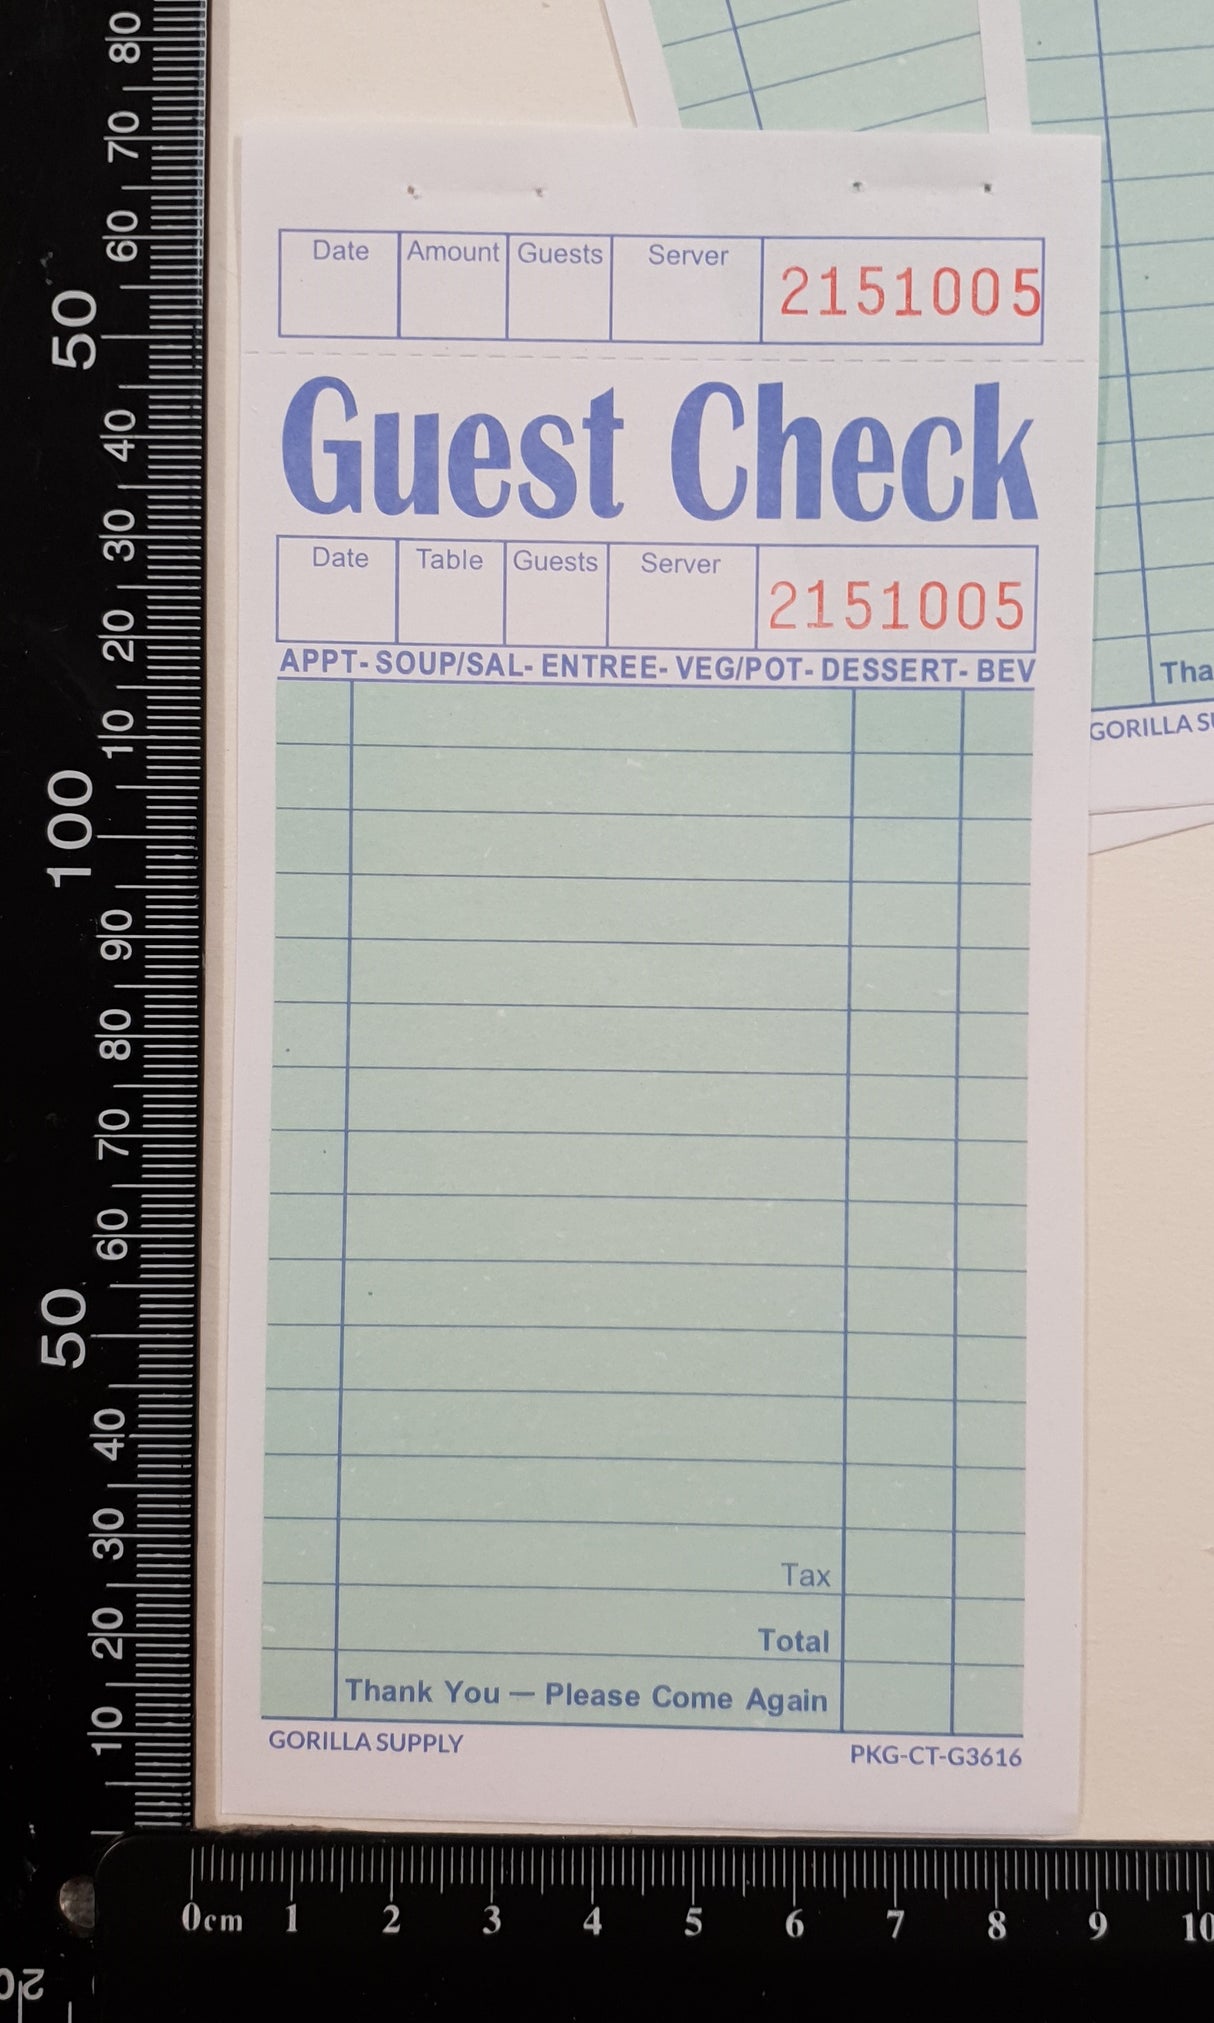 Guest Check Ephemera - Green - 5 sheets